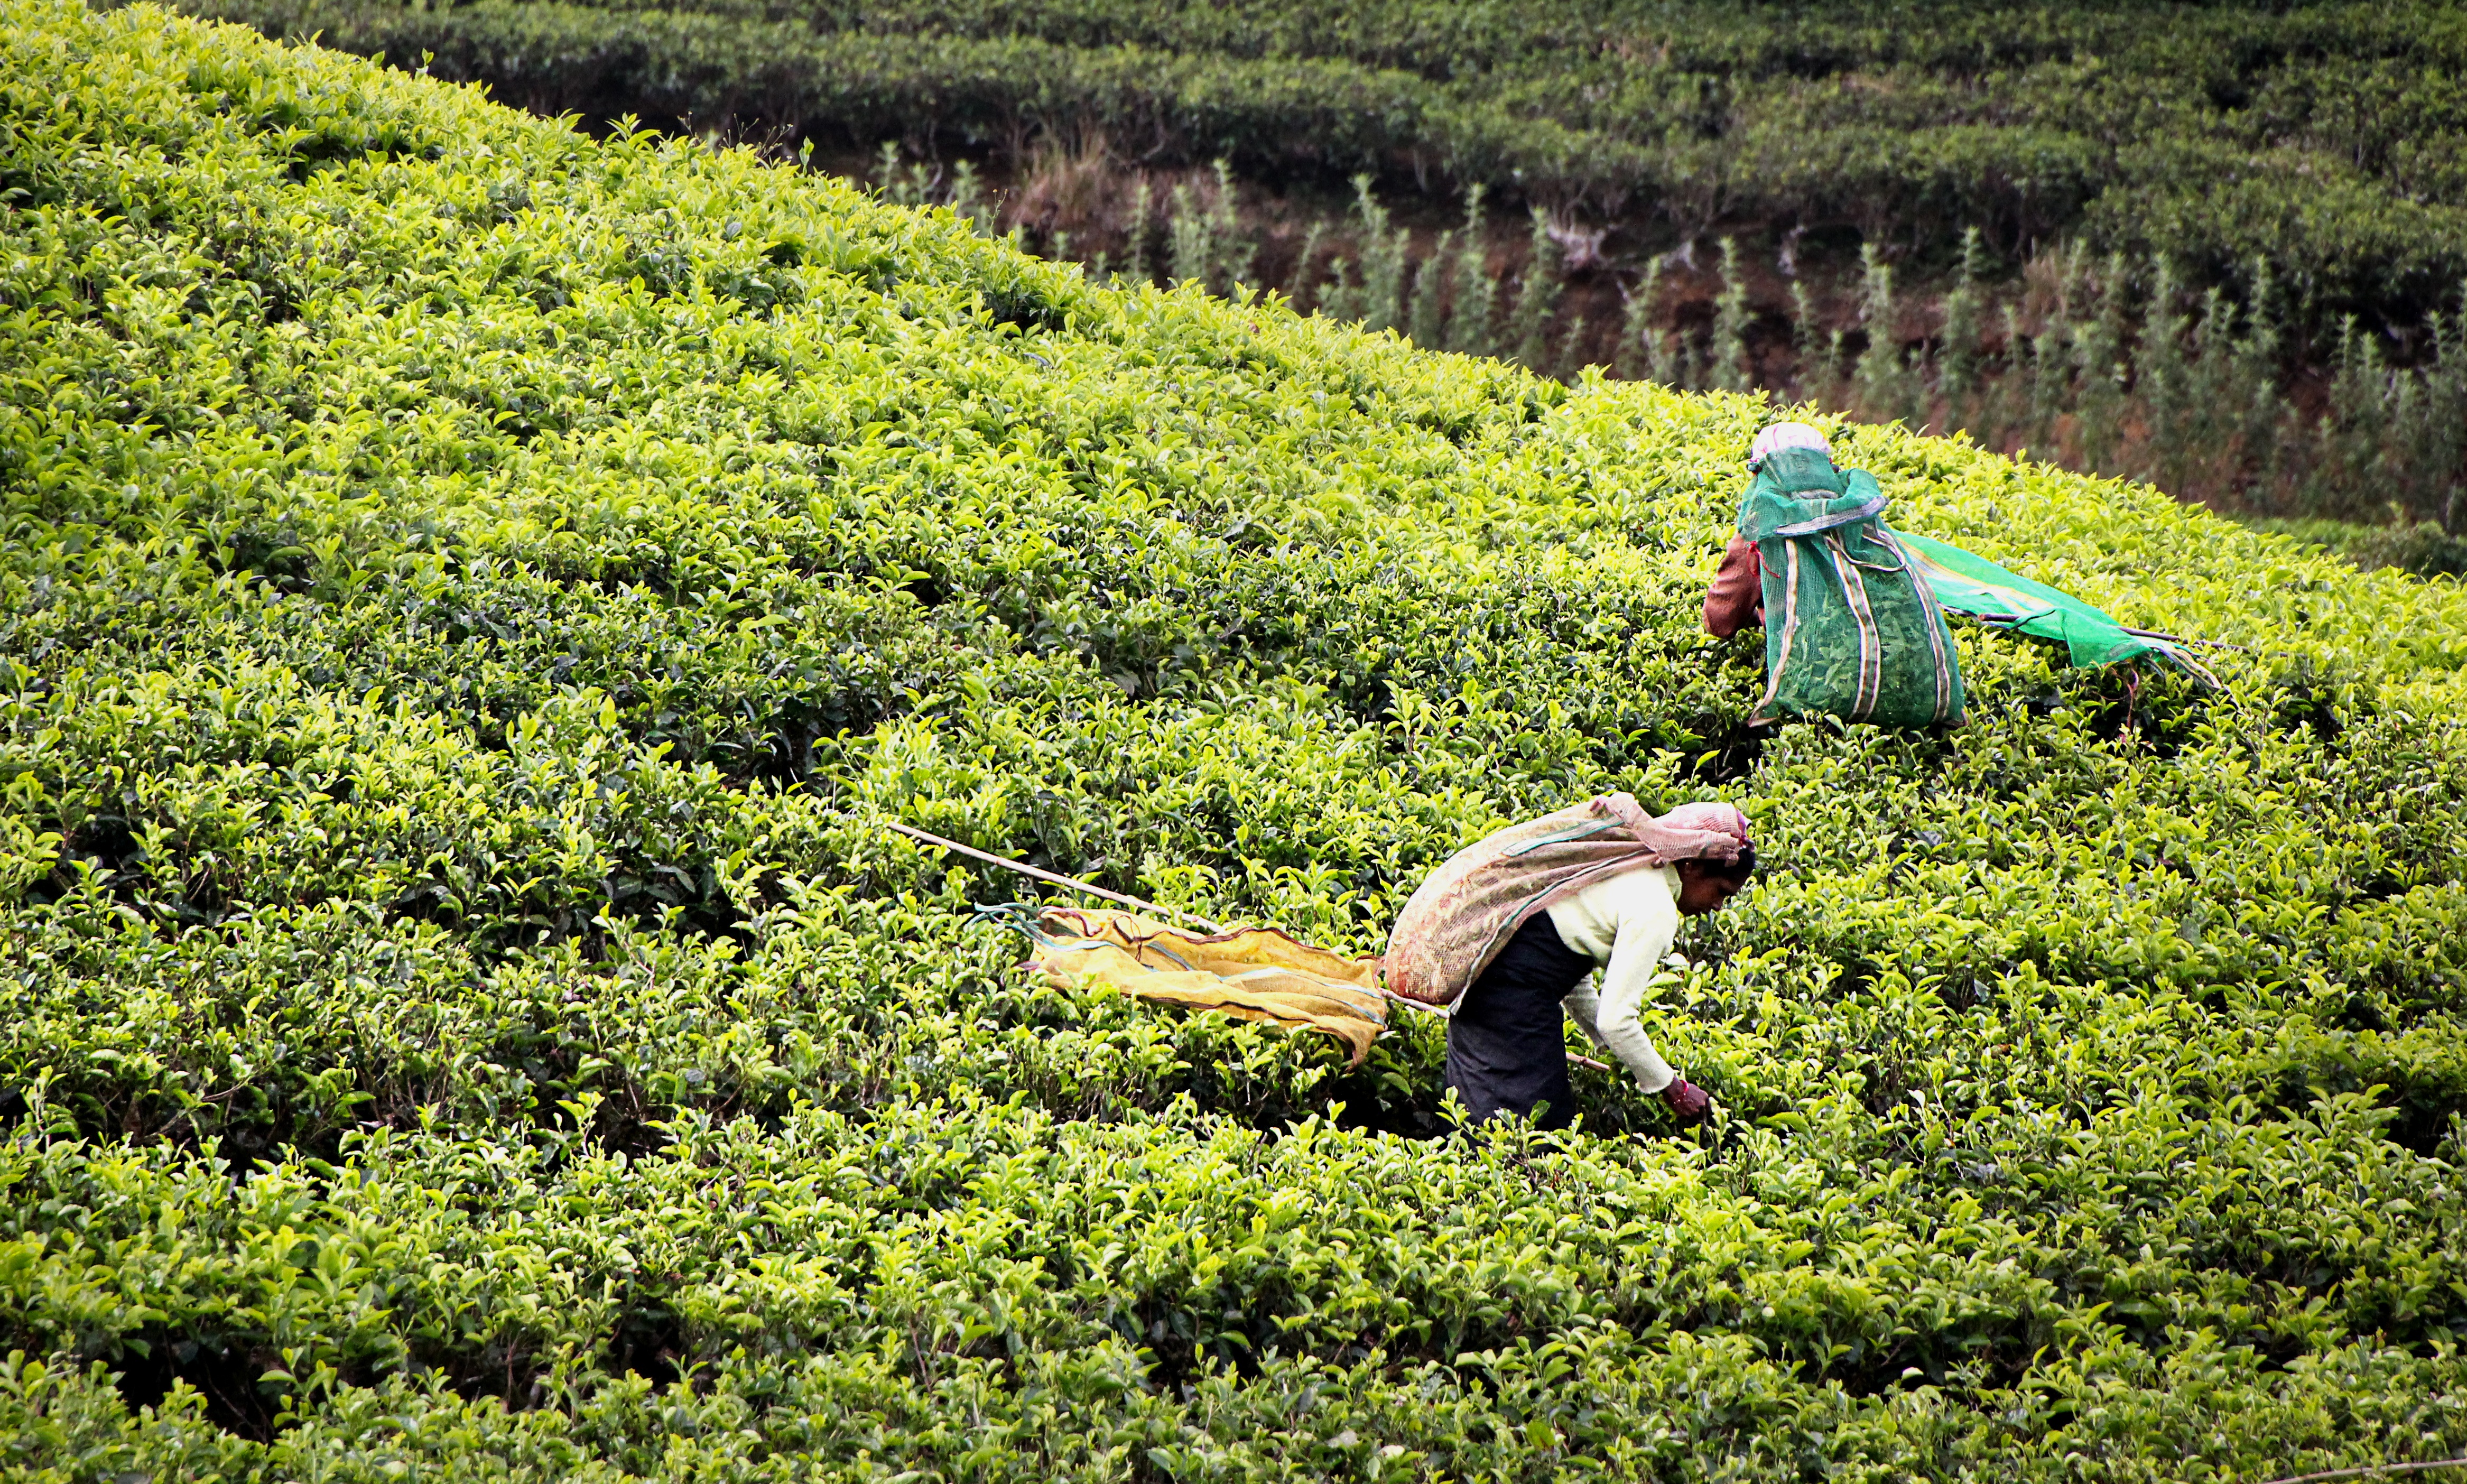 Шри ланка производство. Шри Ланка плантации чая. Чайные плантации Шри Ланки. Чай Шри Ланка пестициды.